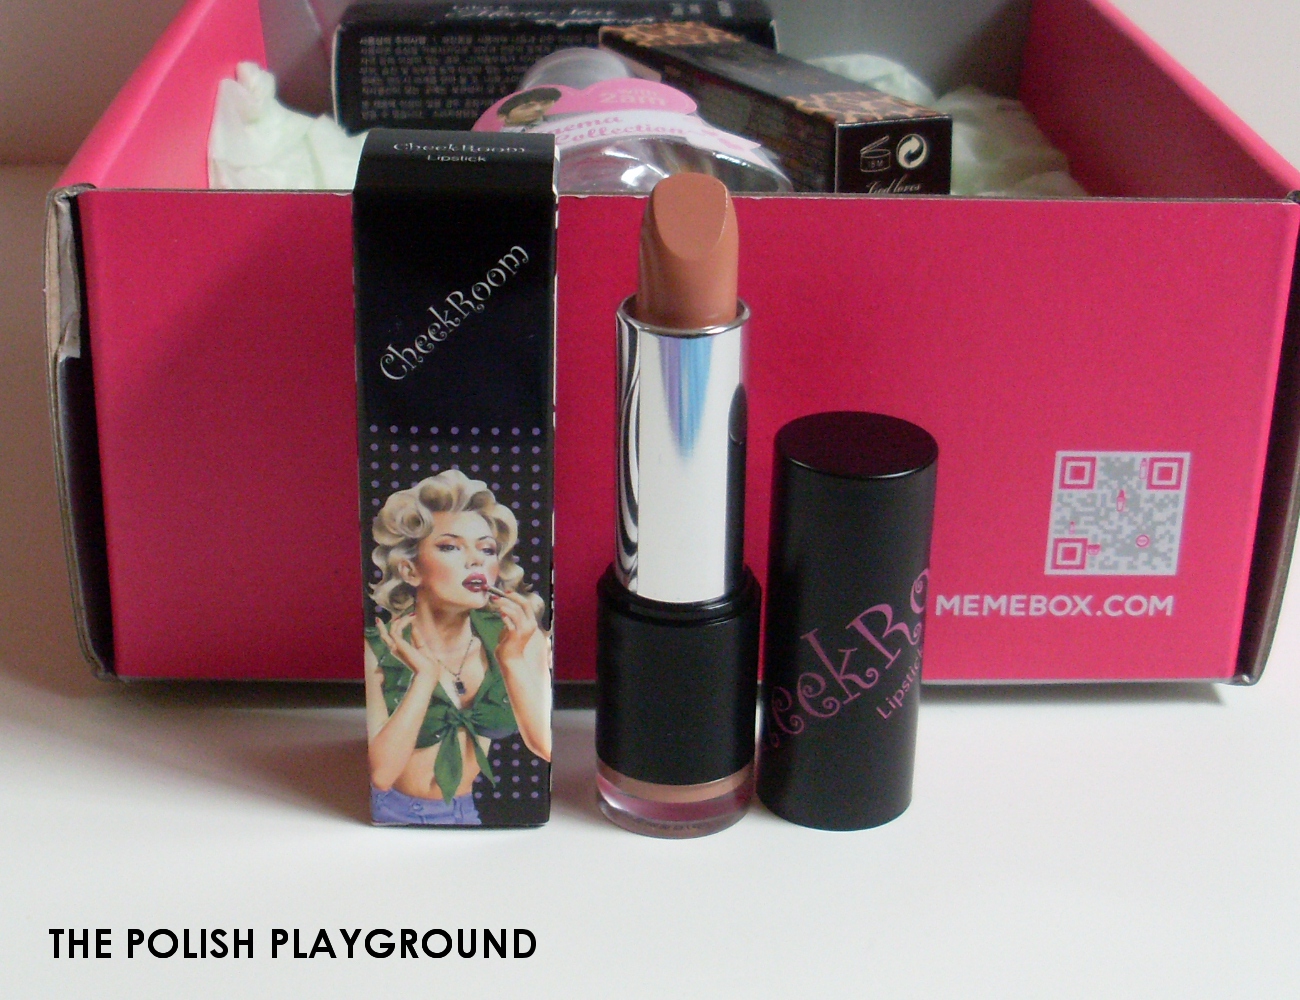 Memebox Superbox #58 Lipstick Box Unboxing - Cheek Room Lipstick in 09 Nude Beige